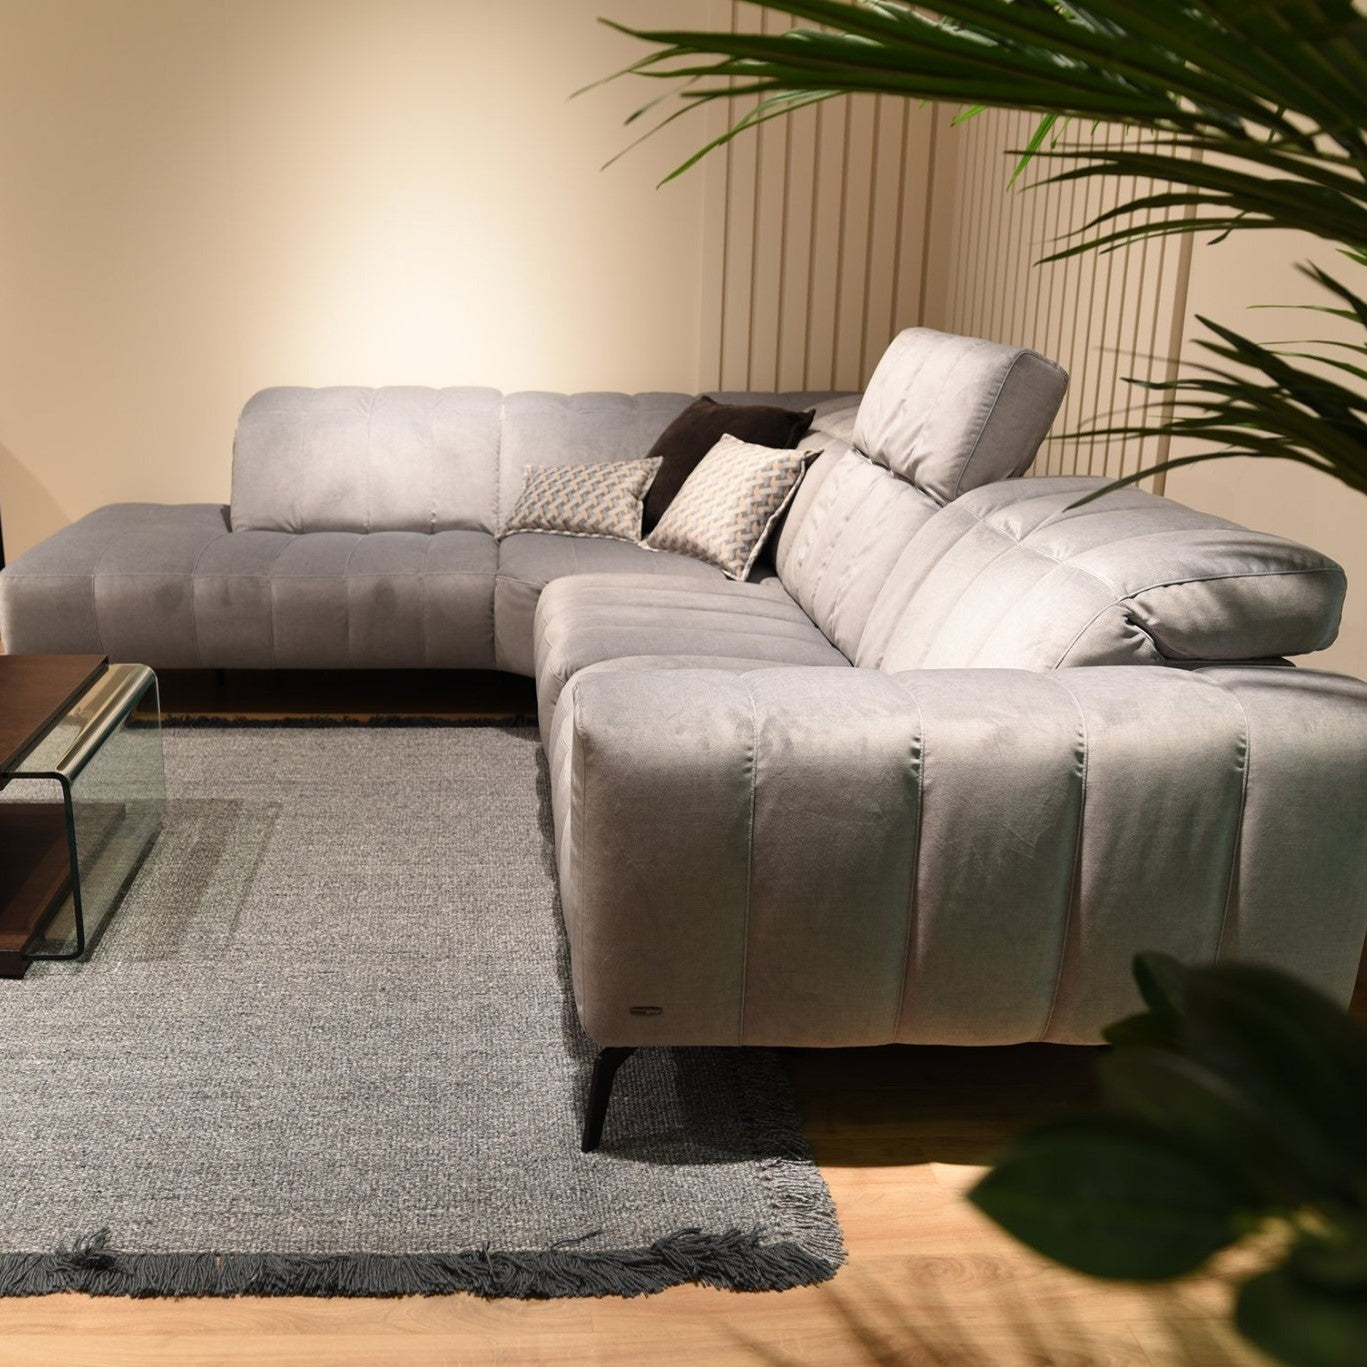 Natuzzi Editions Portento C142 Modular Sofa. Available from your Natuzzi Stockist Make Your House A Home, Bendigo, Victoria. Australia wide delivery to Melbourne. Italian leather.